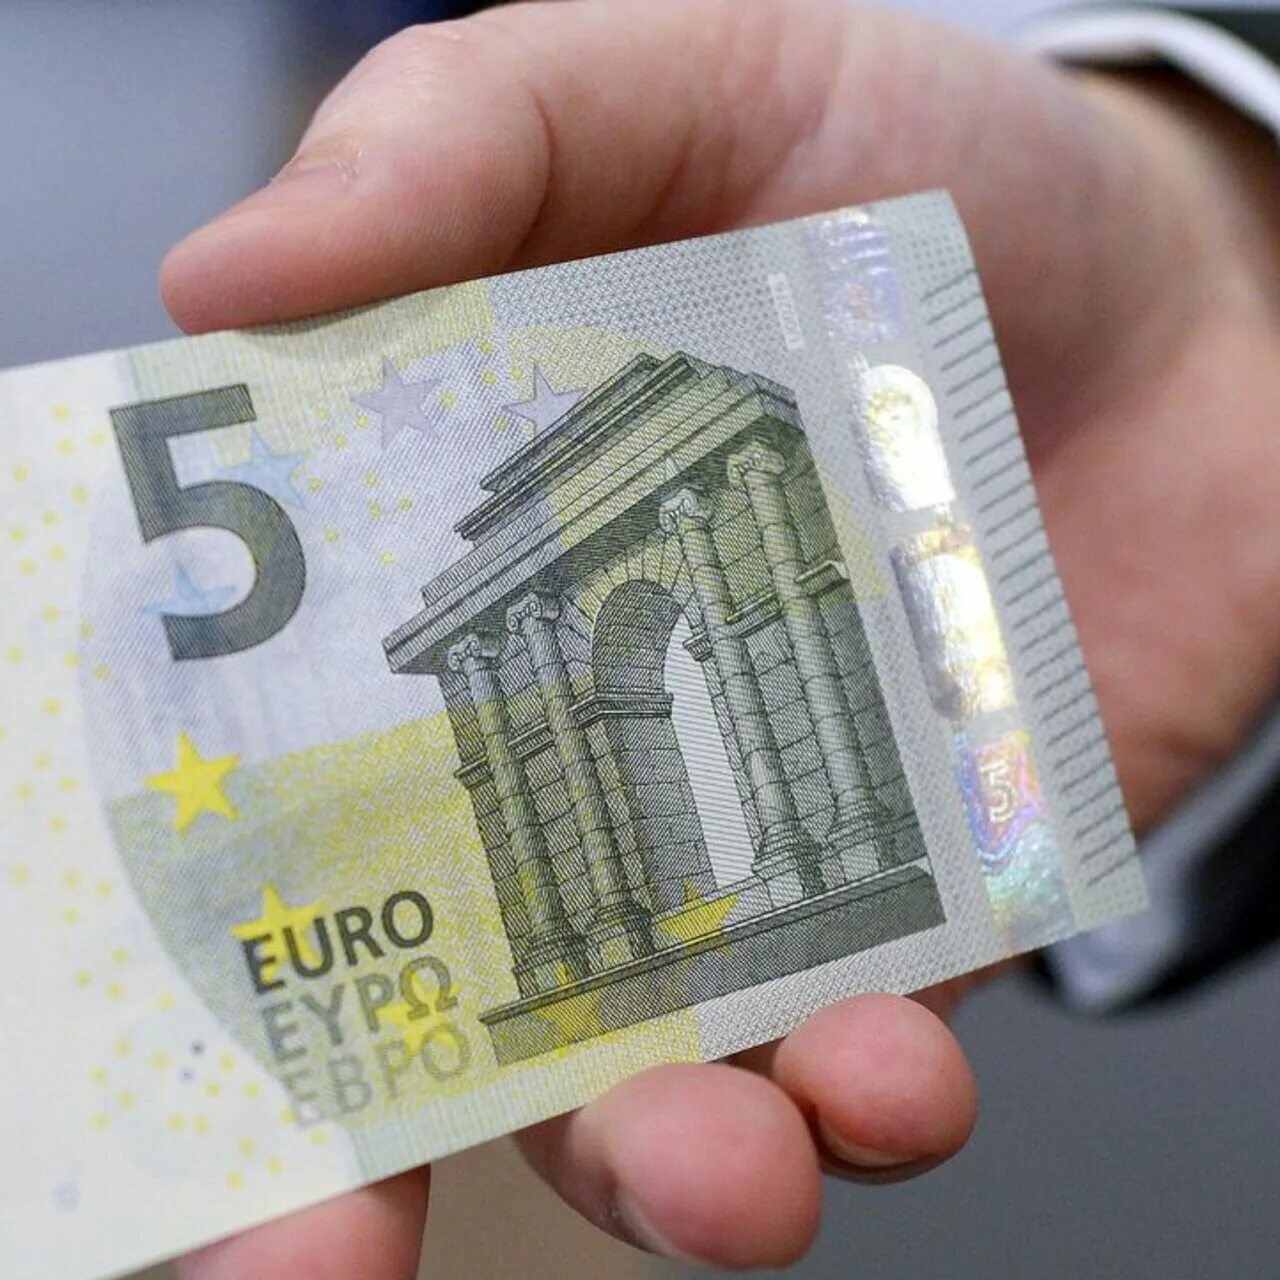 5 Евро валюта. 5 Евро фото. Как выглядит 5 евро. Старые 5 евро.